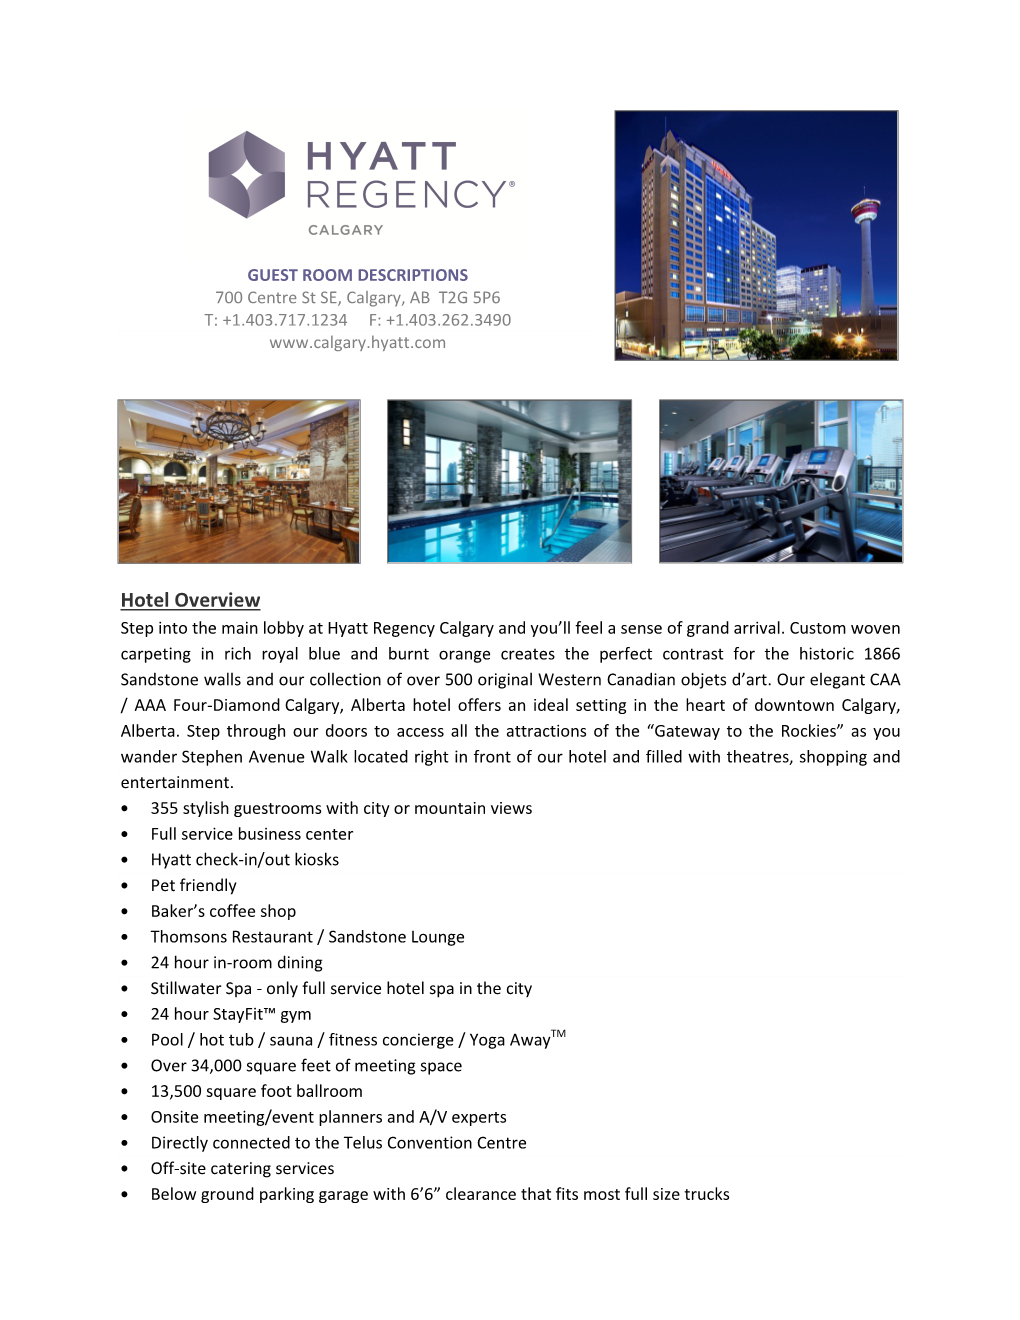 Hyatt Regency Calgary Hotel Rooms and Suite Description